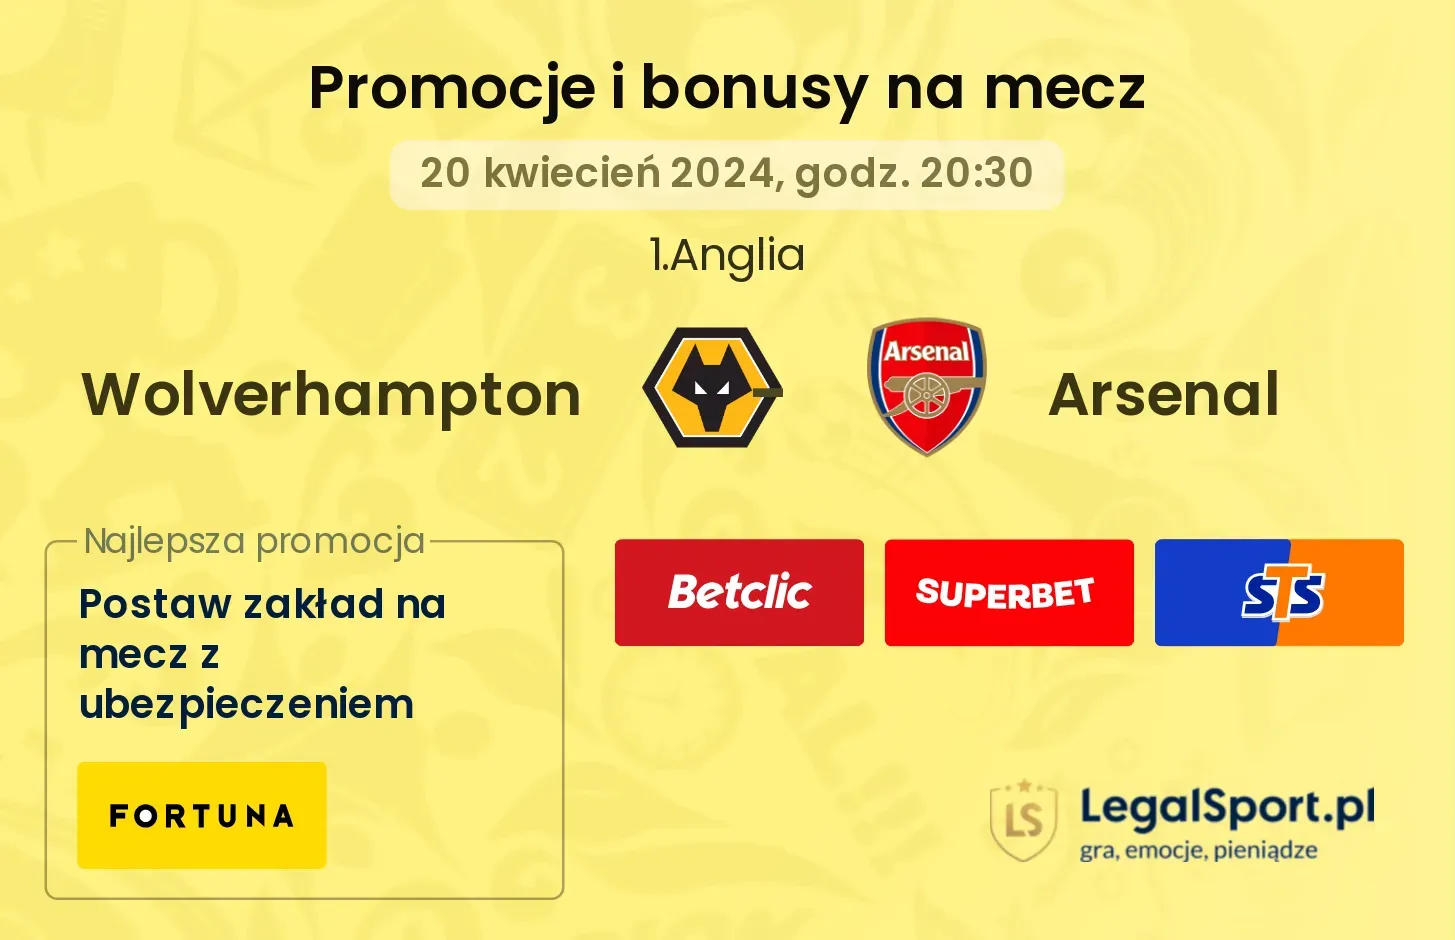 Wolverhampton - Arsenal promocje i bonusy (20.04, 20:30)